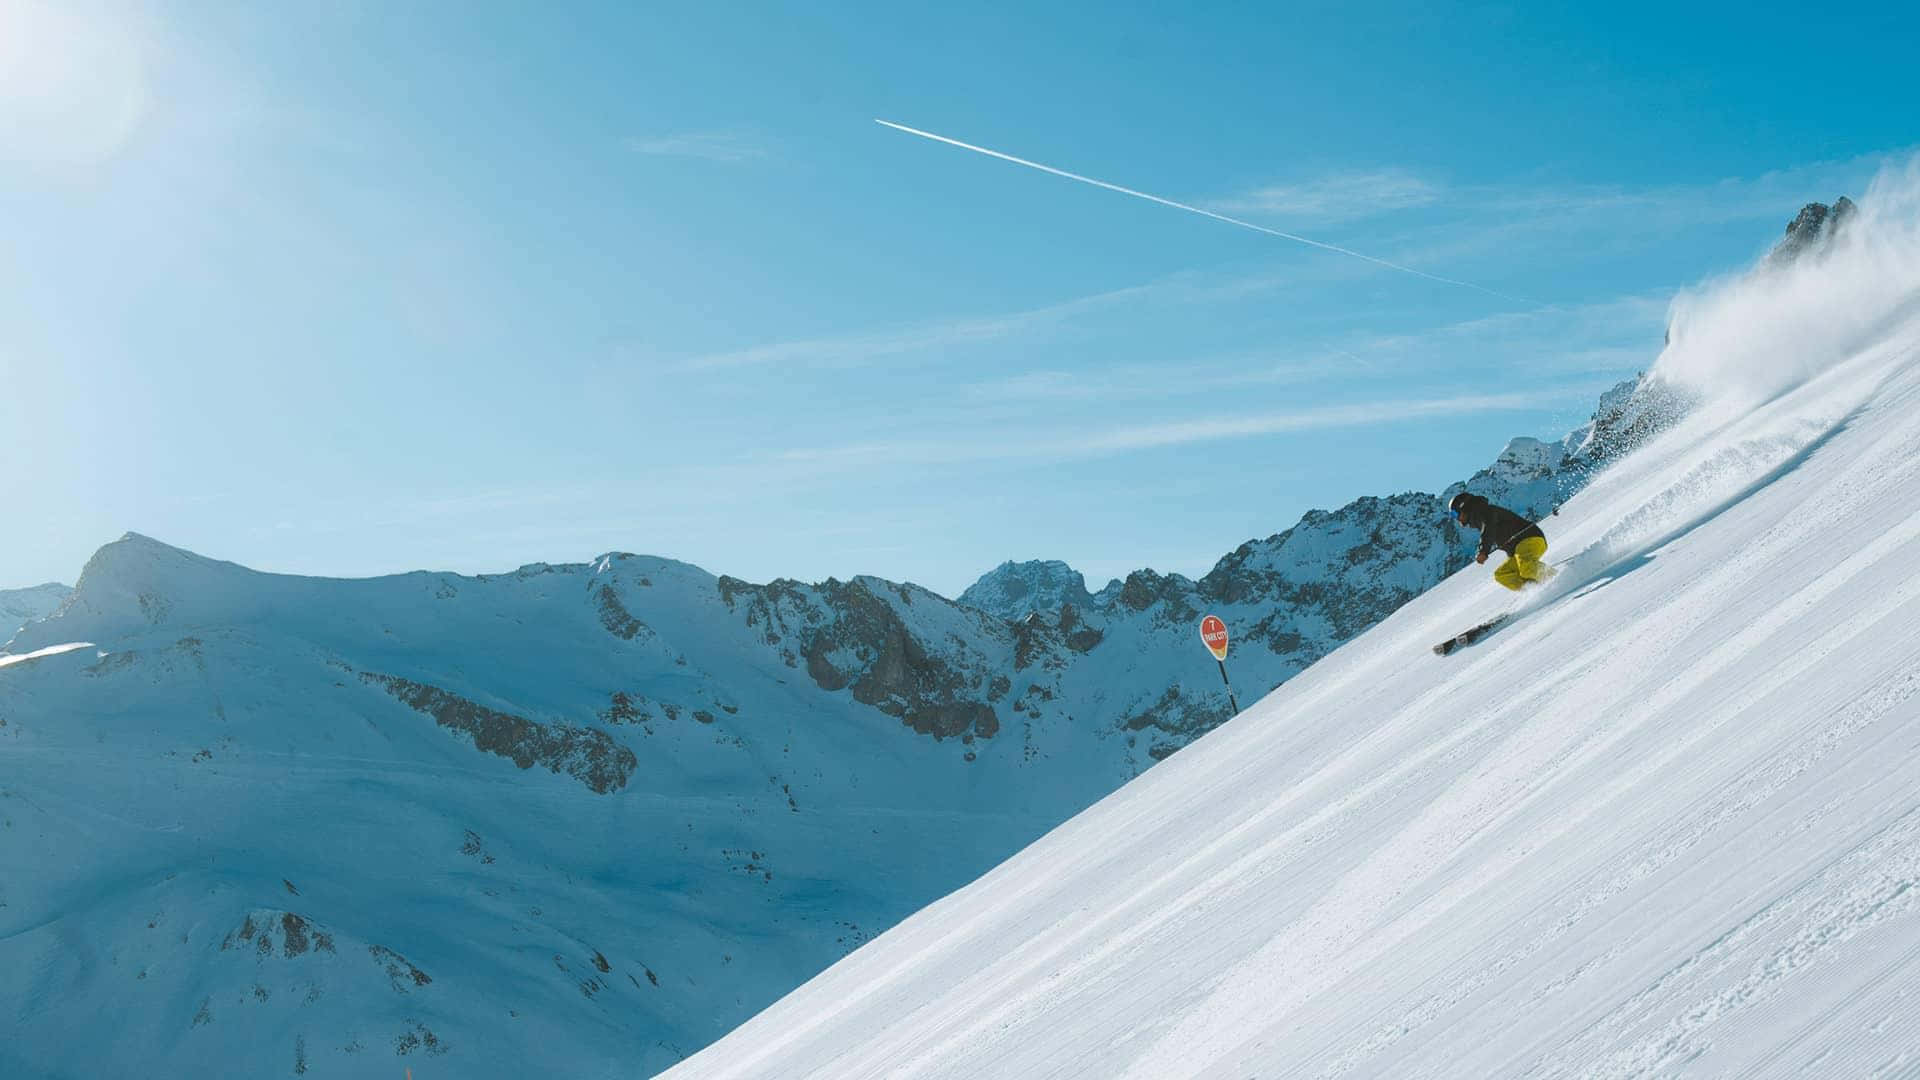 A thrilling ski adventure on powdery slopes